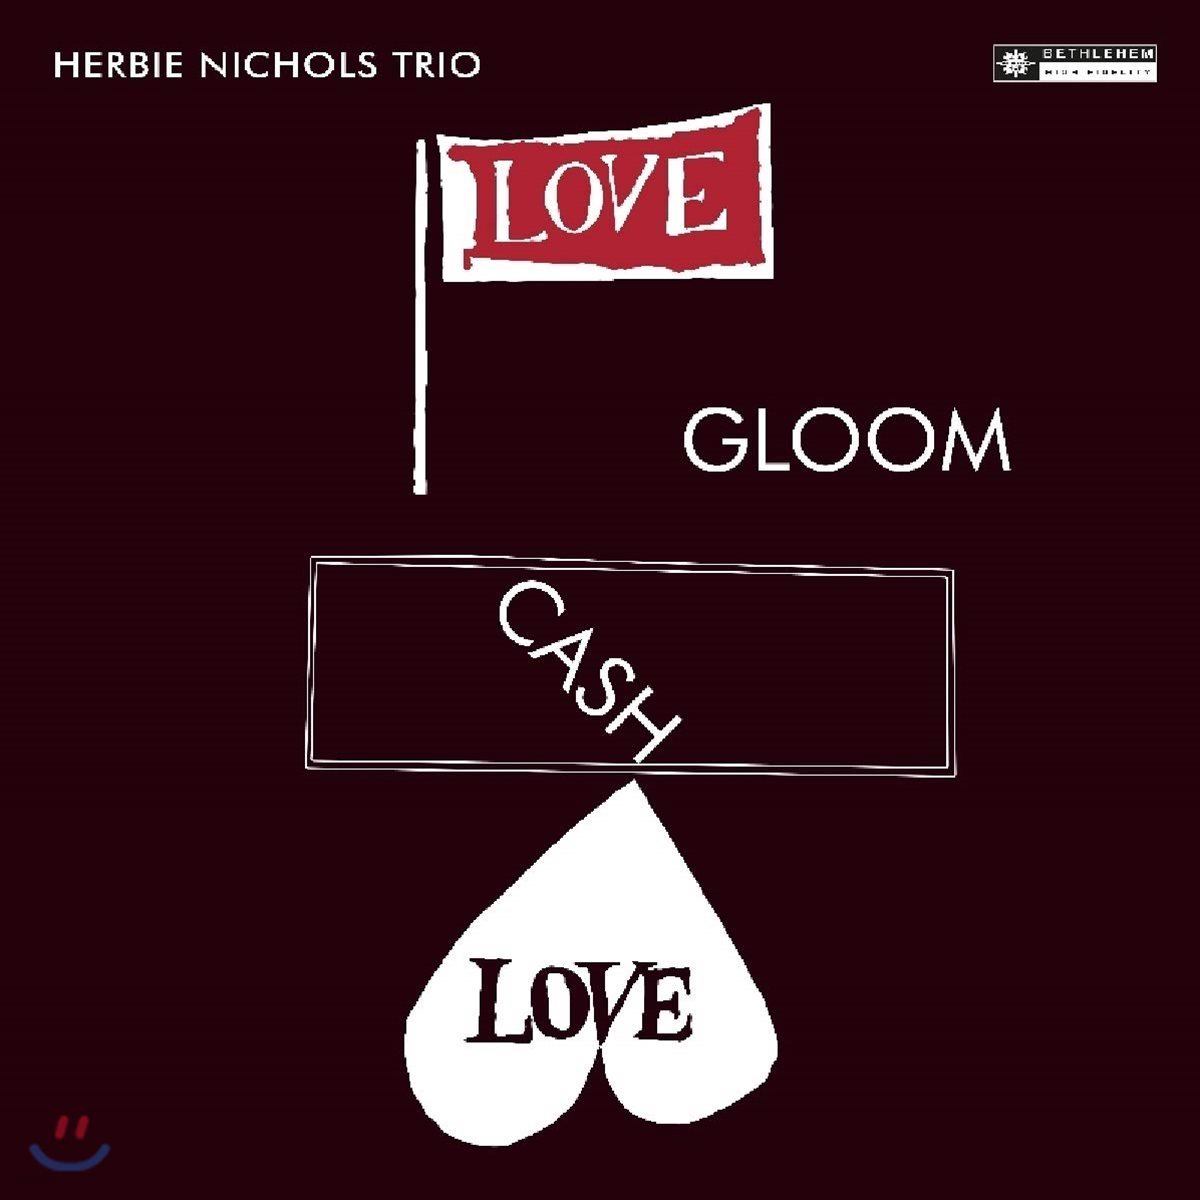 Herbie Nichols Trio (허비 니콜스 트리오) - Love, Gloom, Cash, Love [LP]